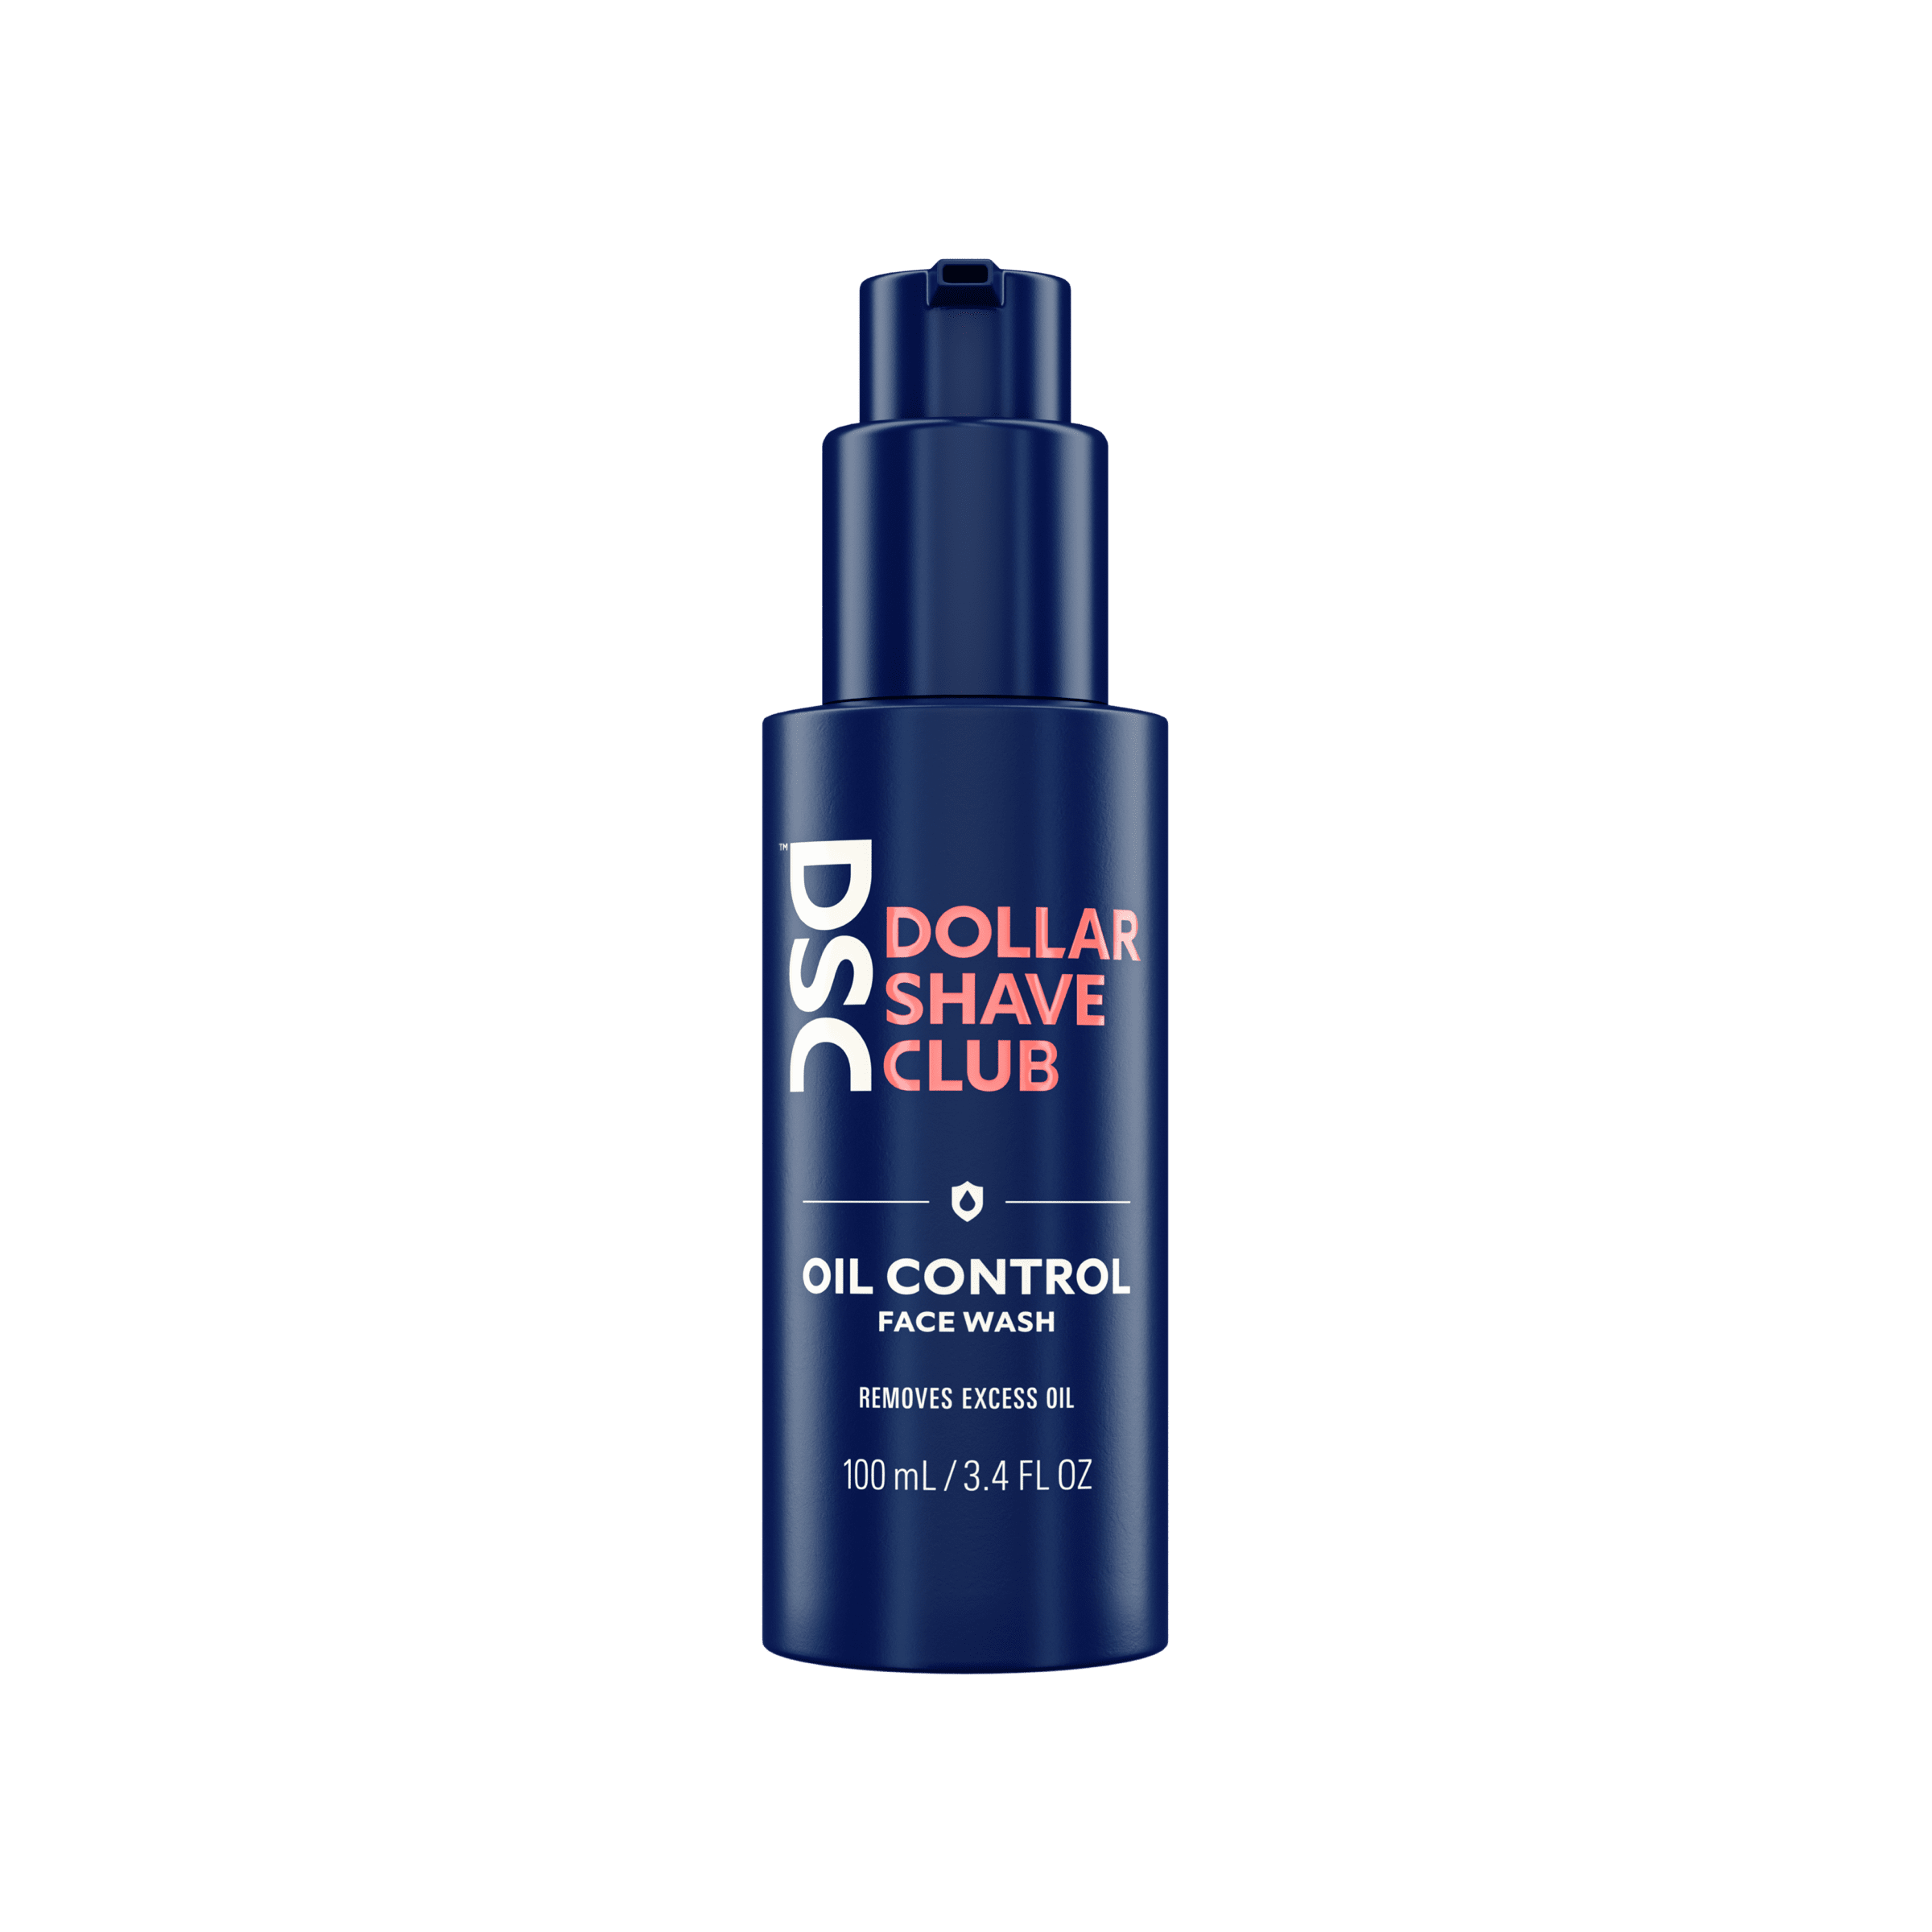 Dollar Shave Club Oil Control Face Wash against blank backdrop.